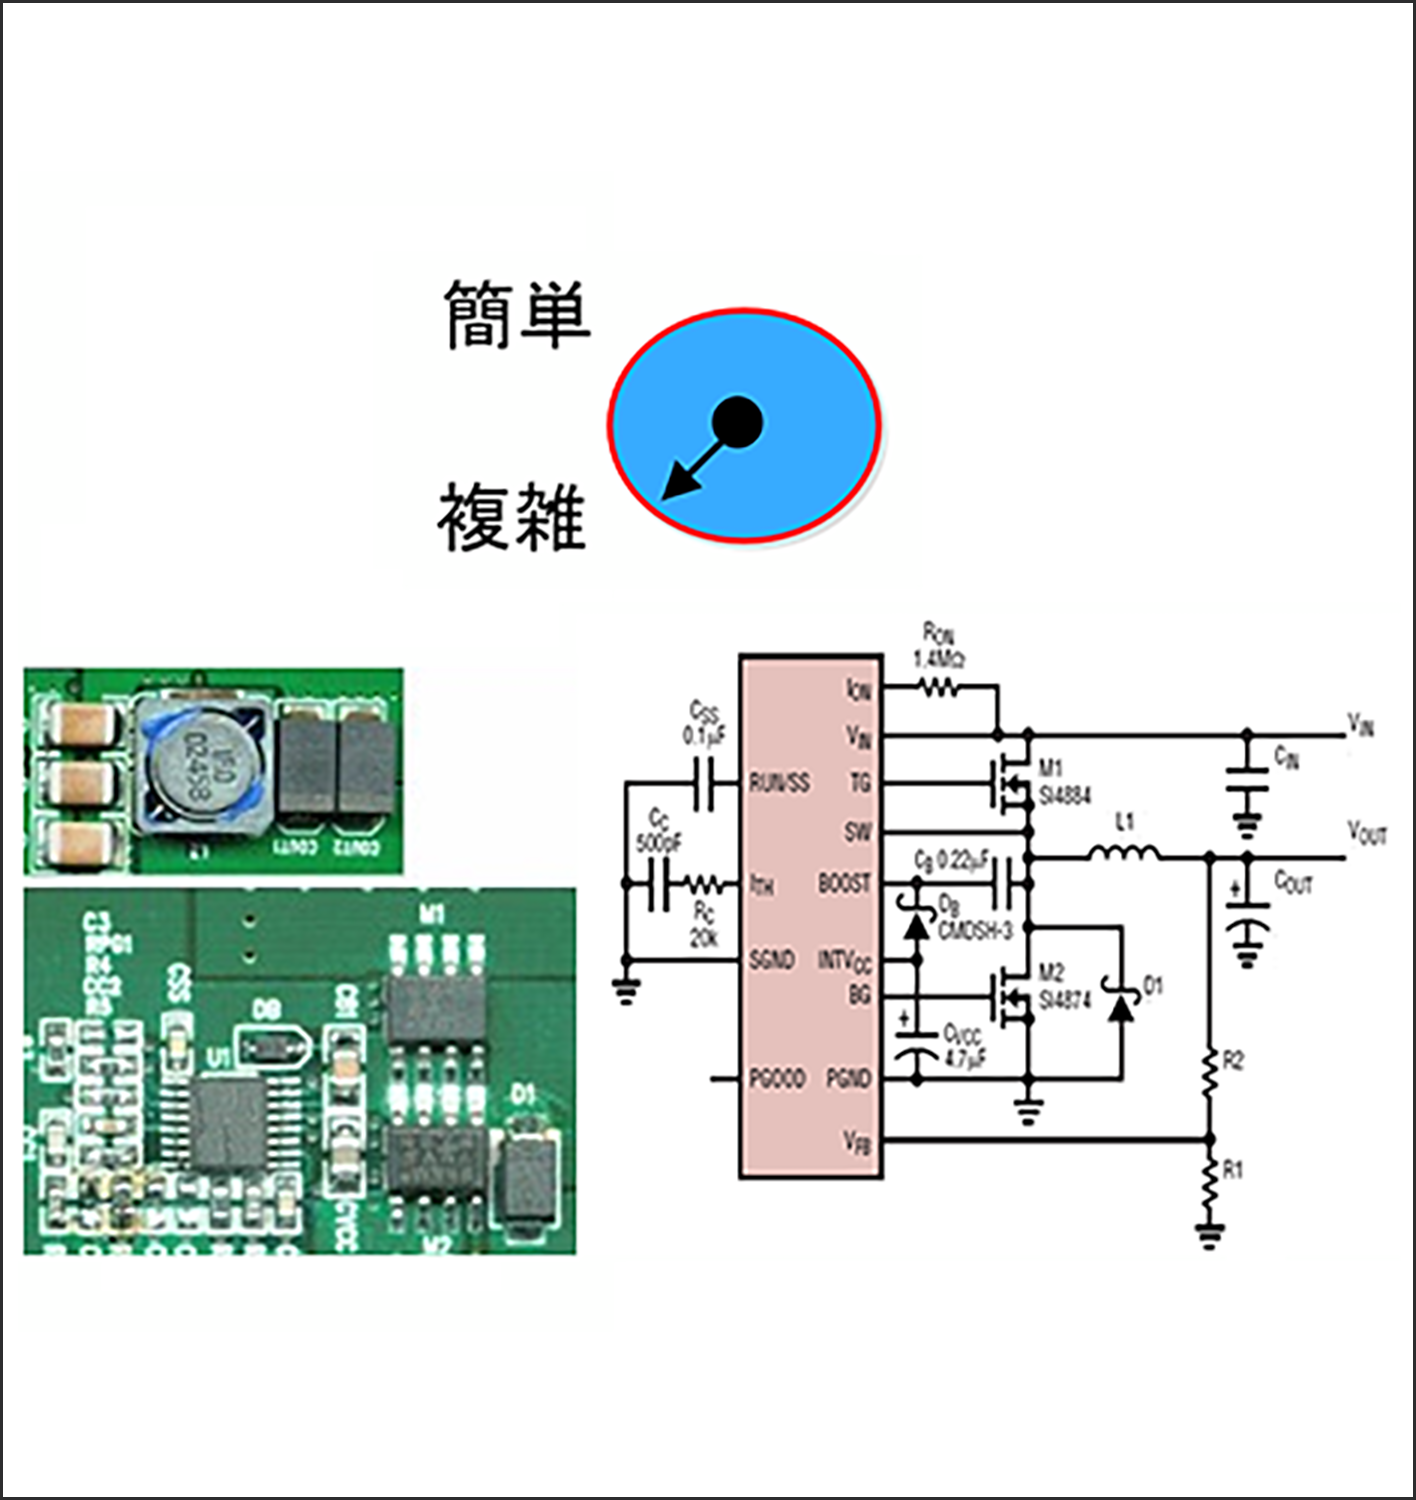 Figure 3: Controller type DC/DC converter